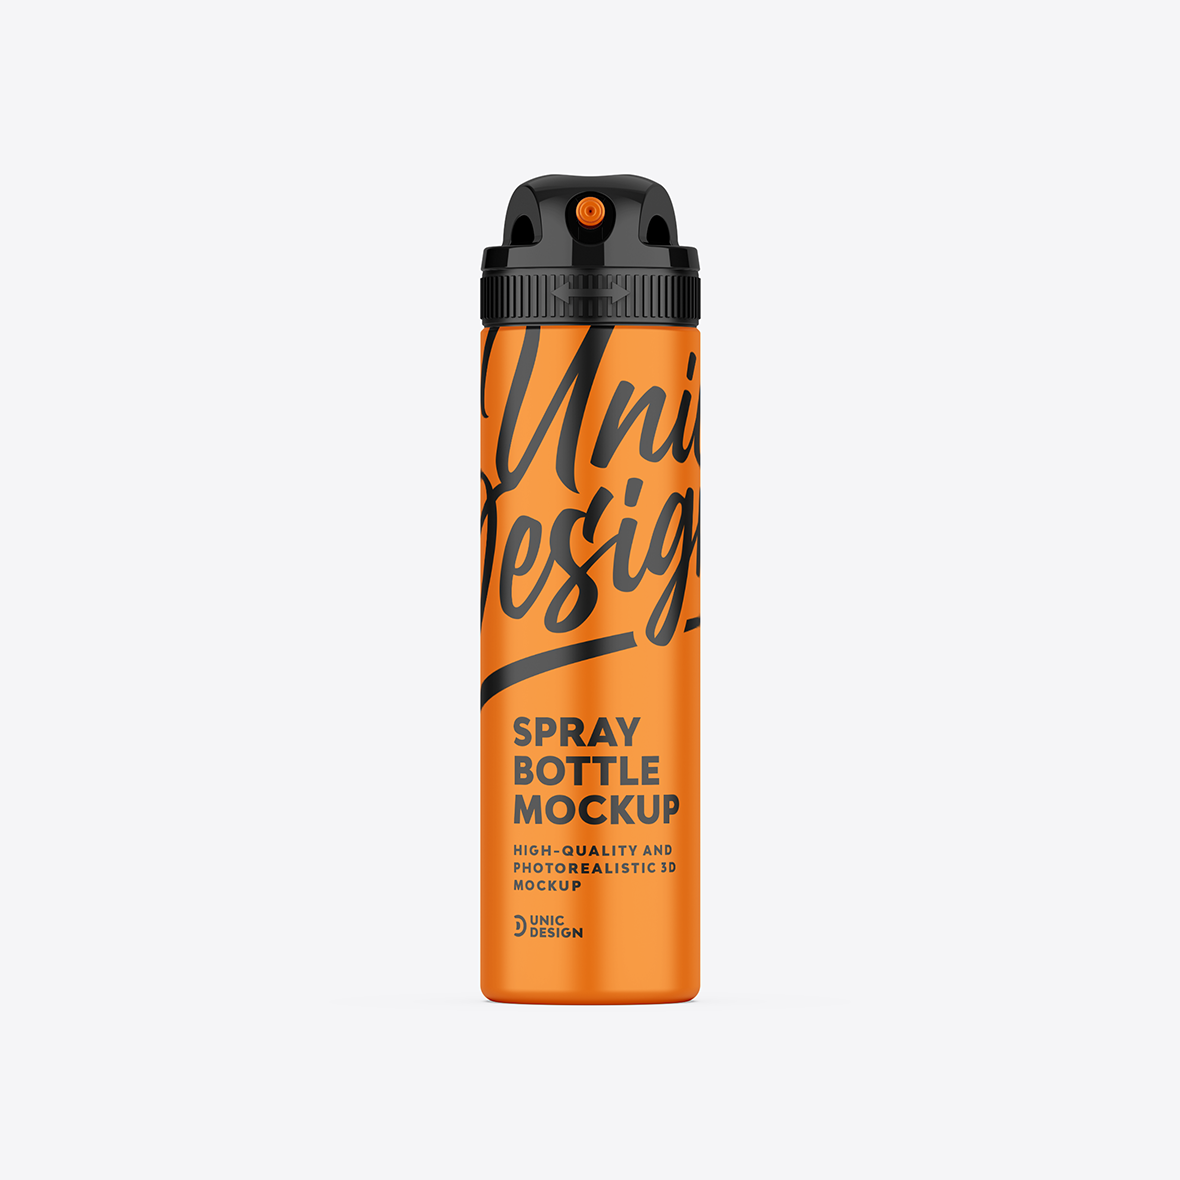 Deodorant Spray Bottle Mockup